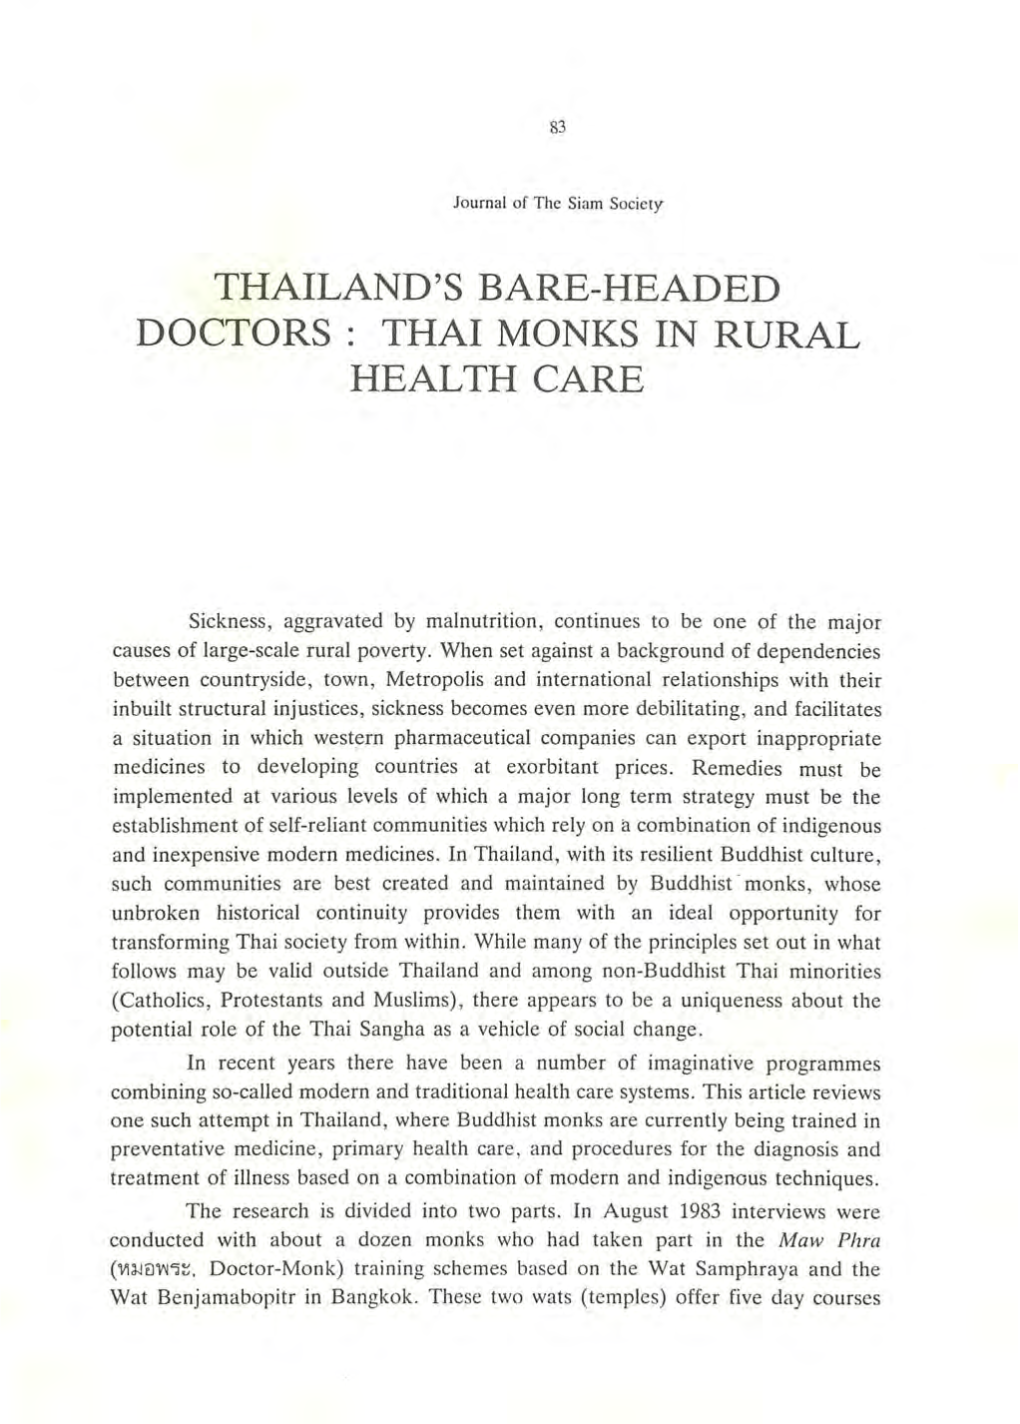 Thai Monks in Rural Health Care